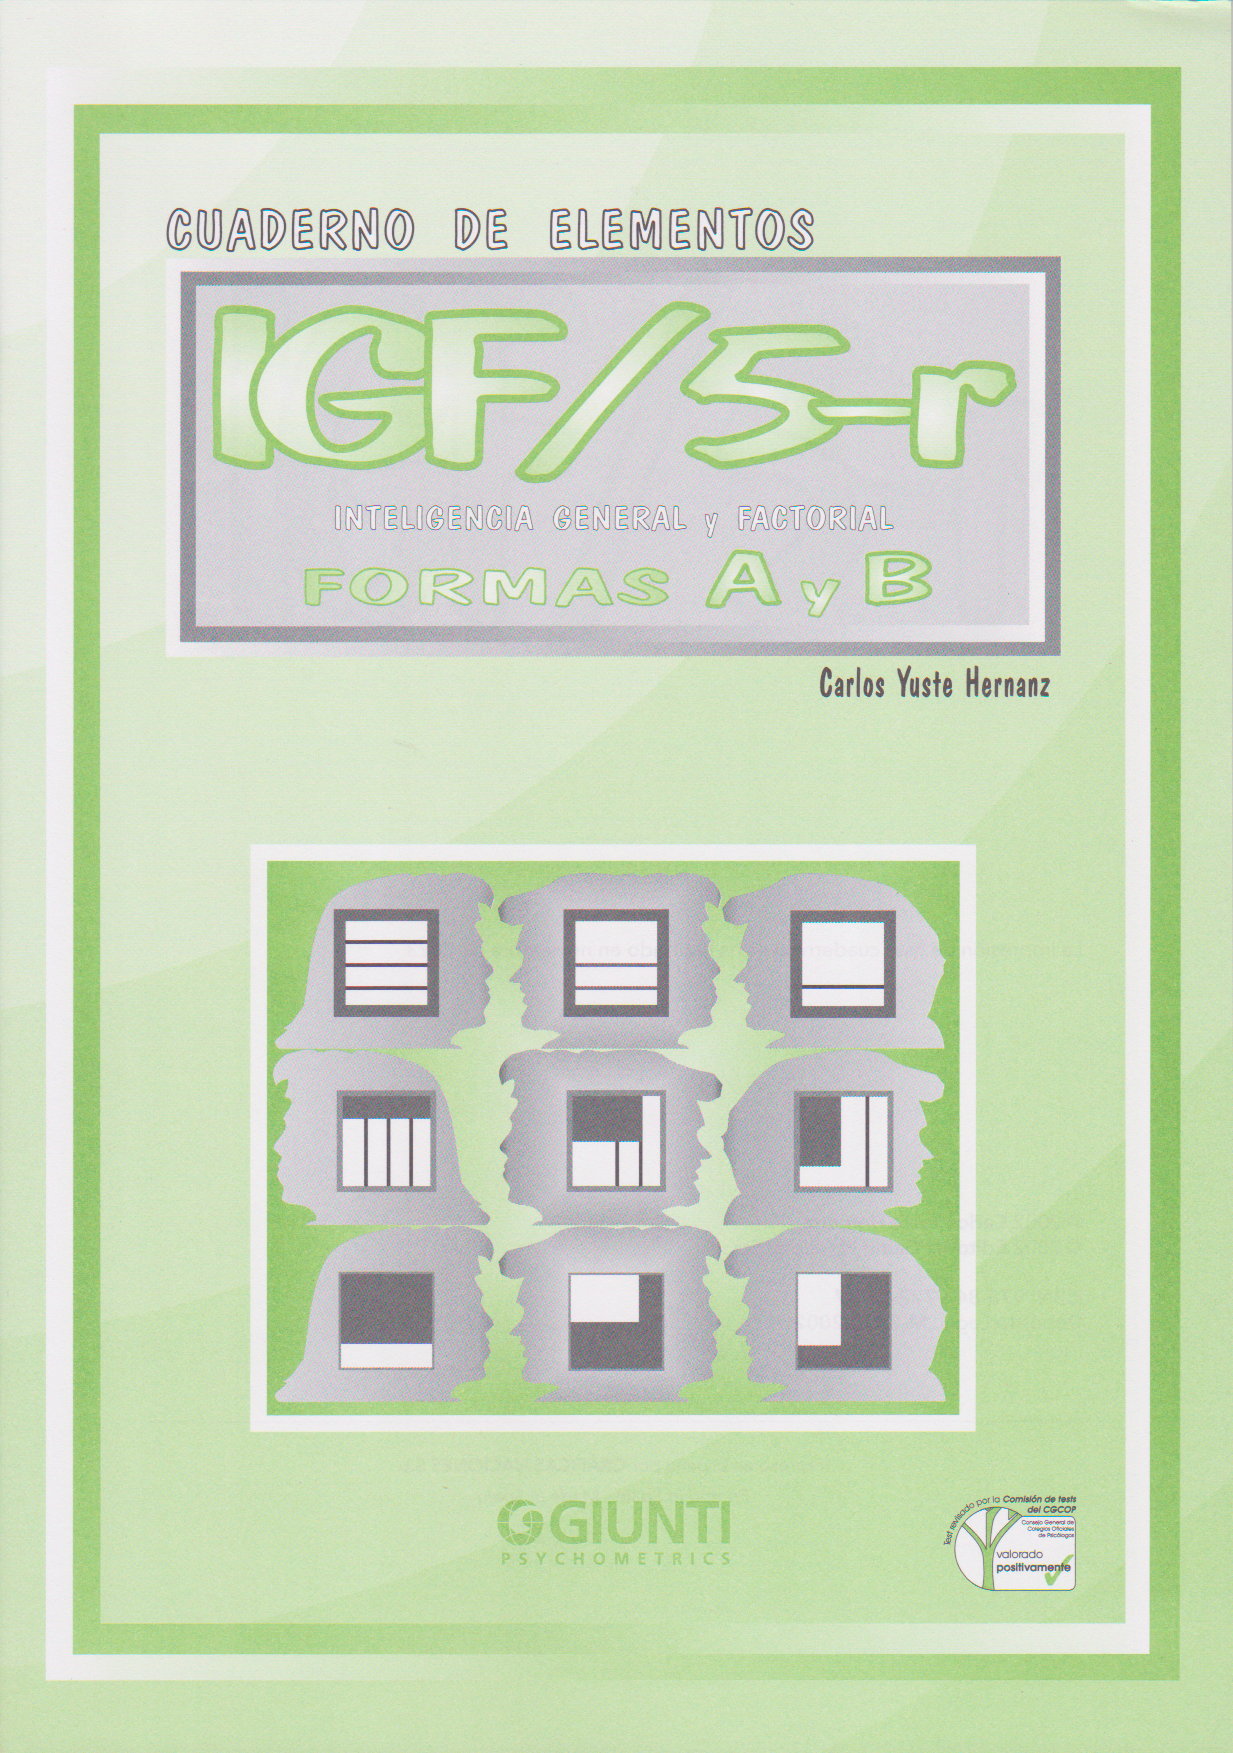 CuadernoElementos-IGF-5-formasAyB